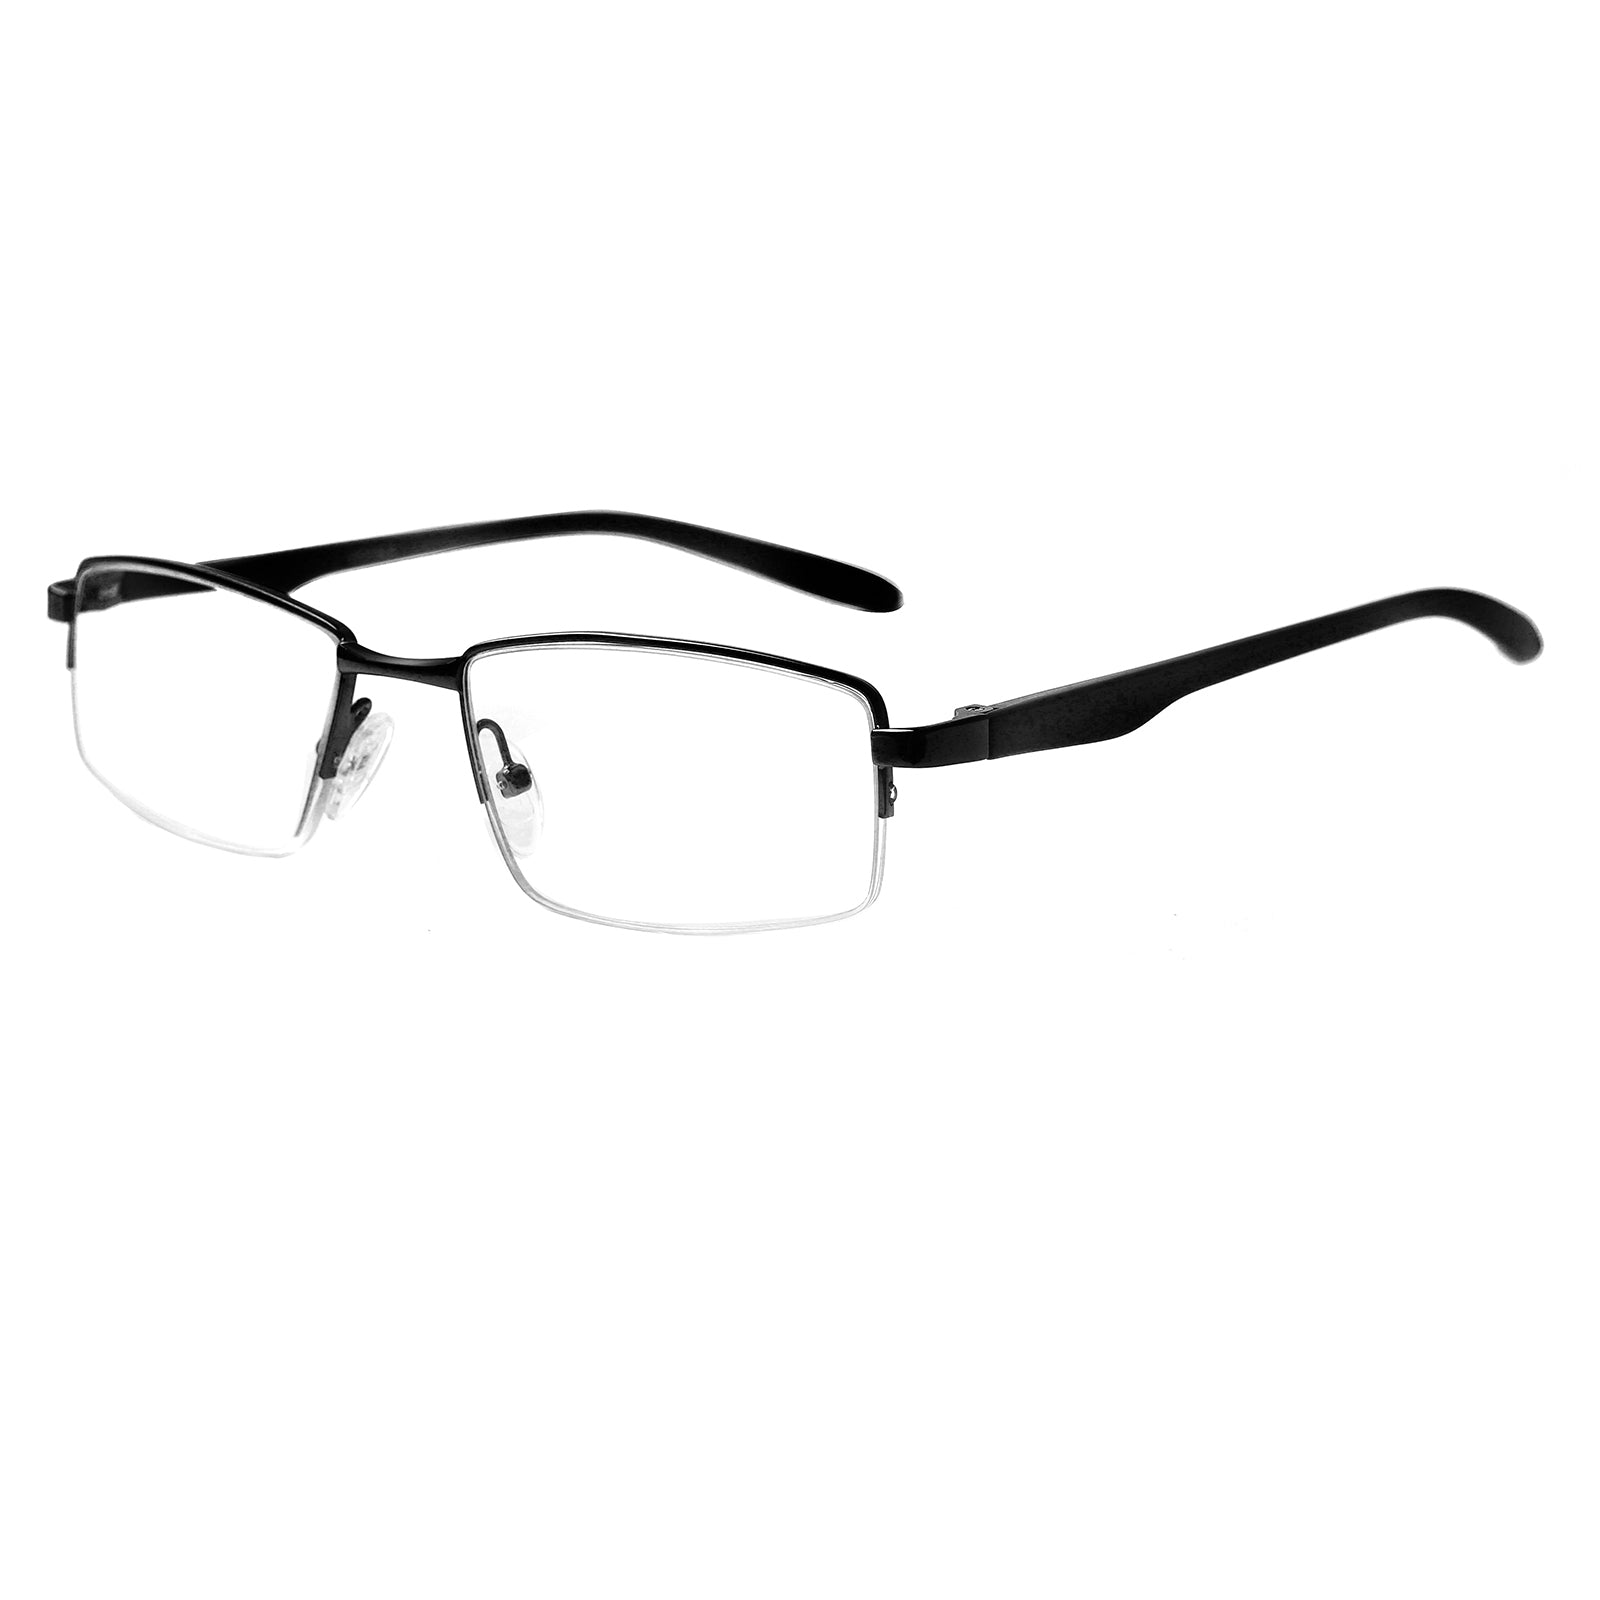 Black Computer Glasses